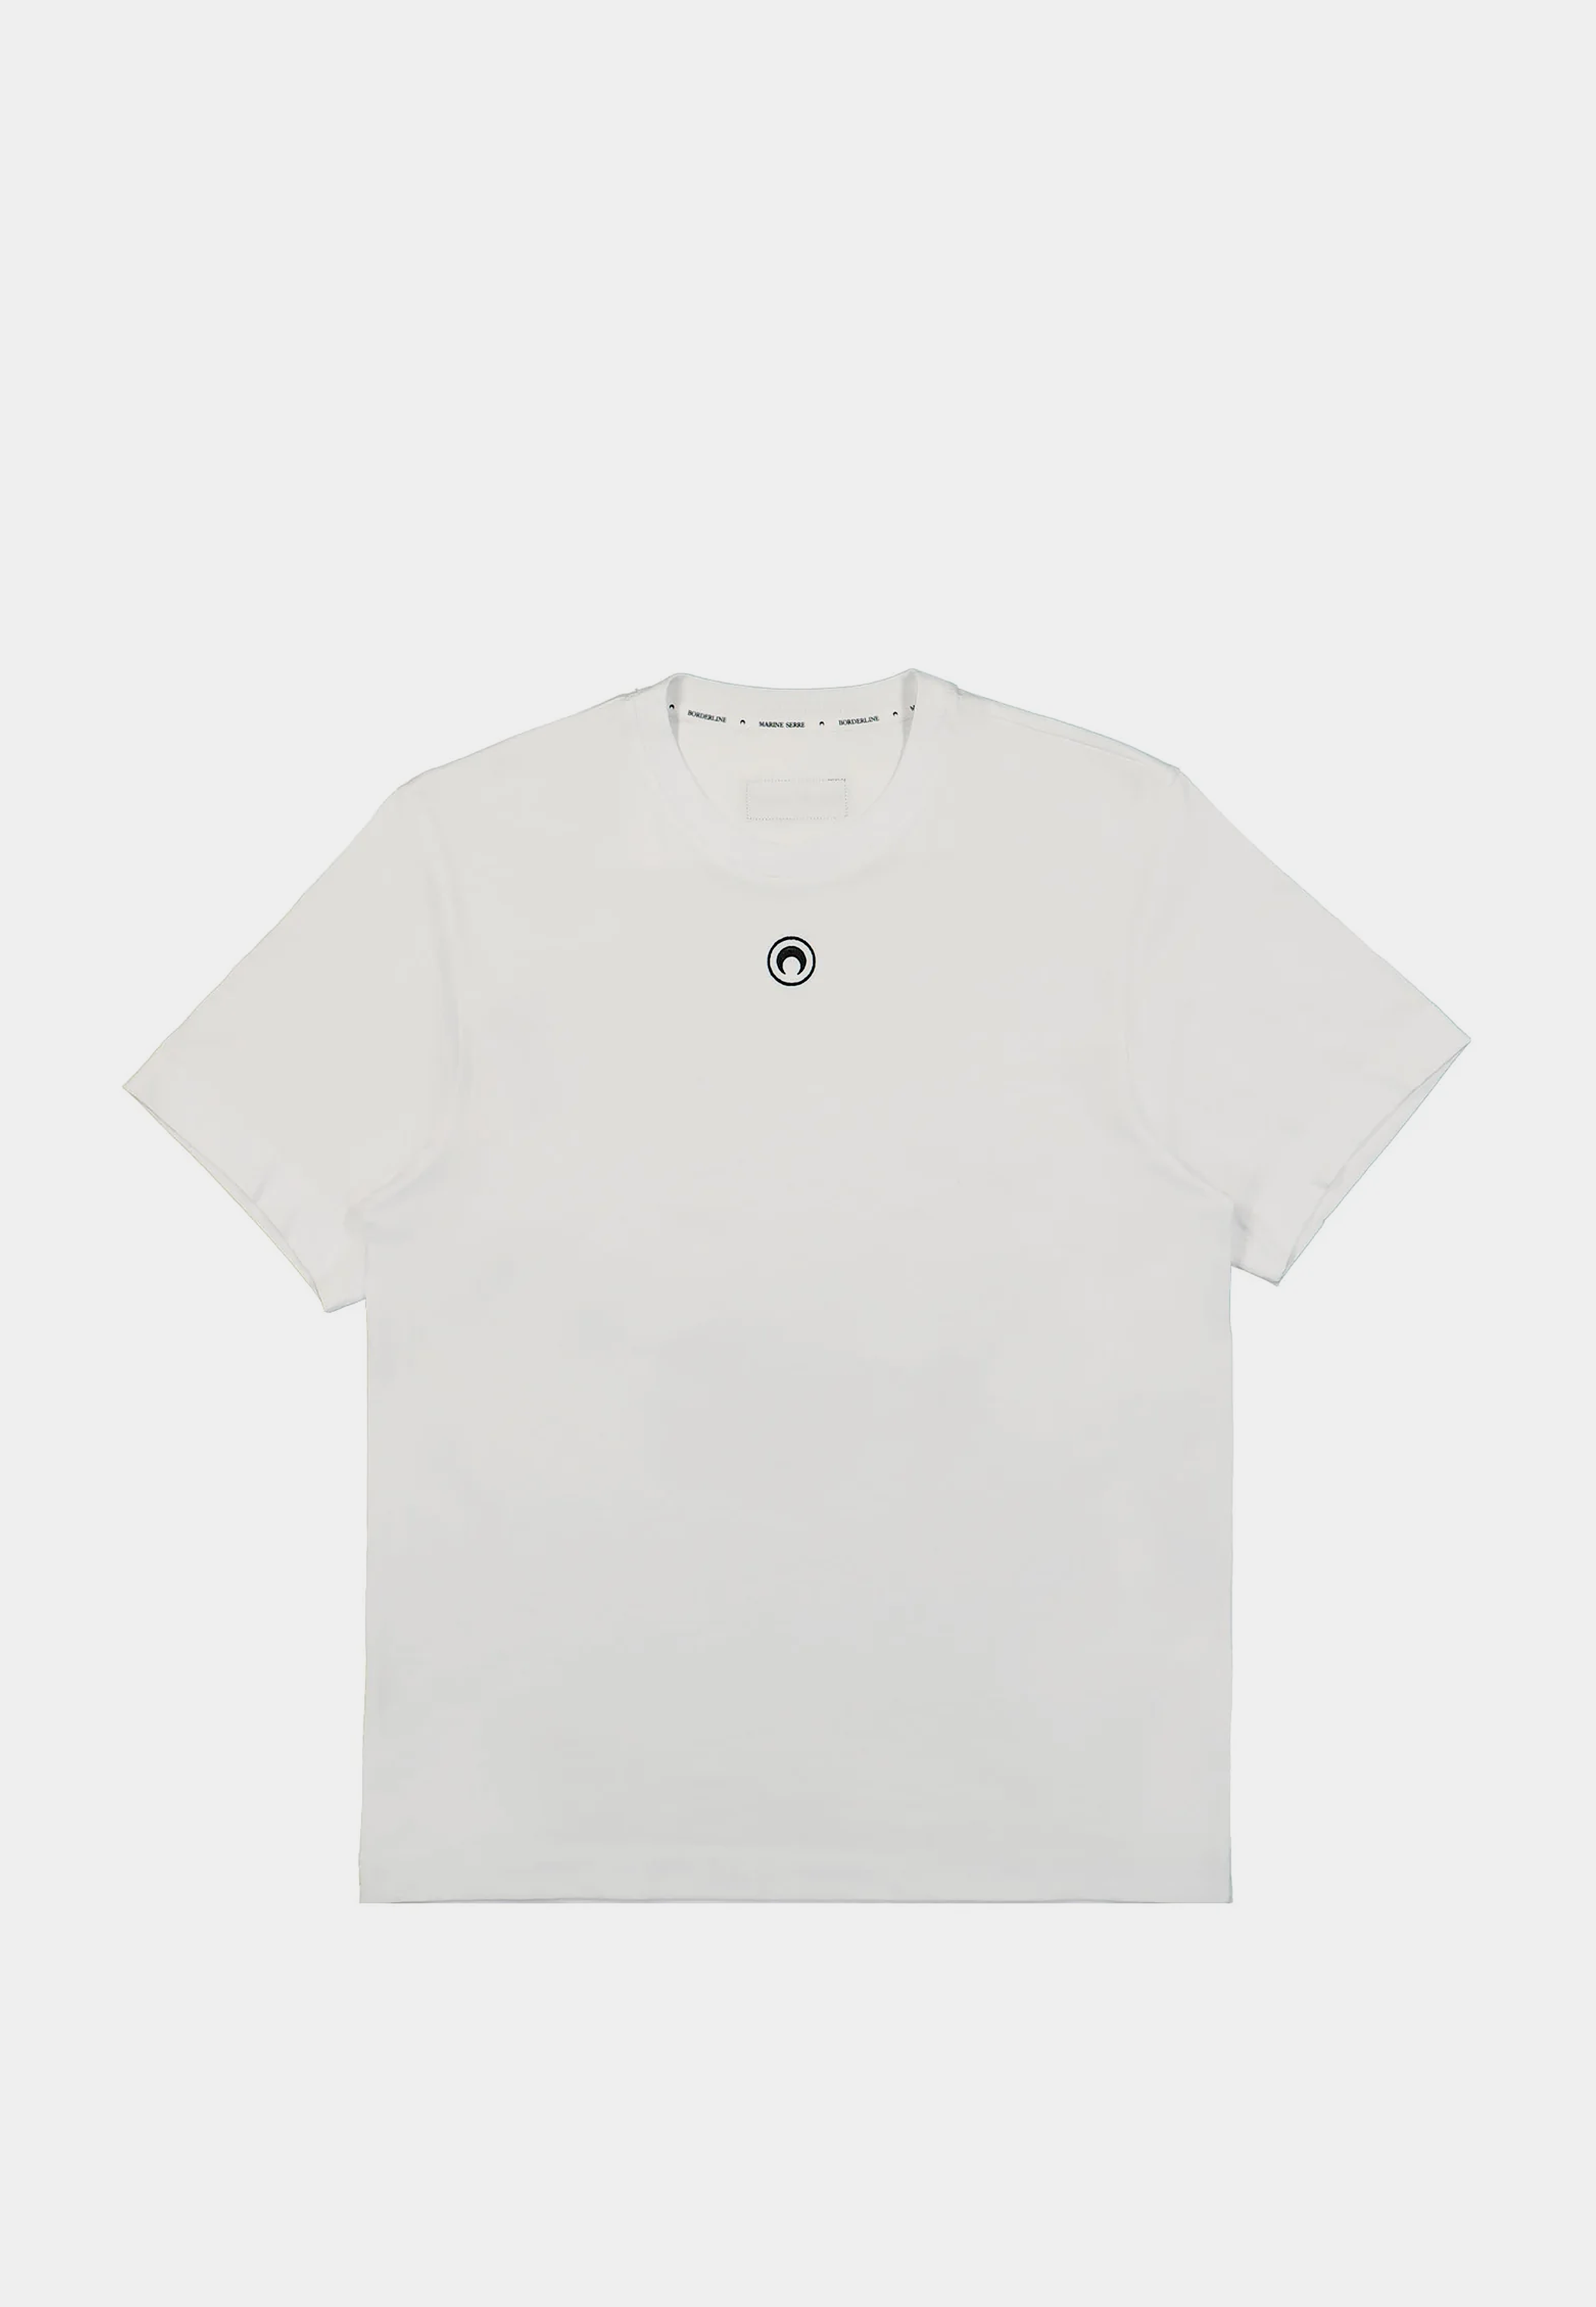 Marine Serre Organic Cotton Jersey Plain T-Shirt 1472-Wh10 White